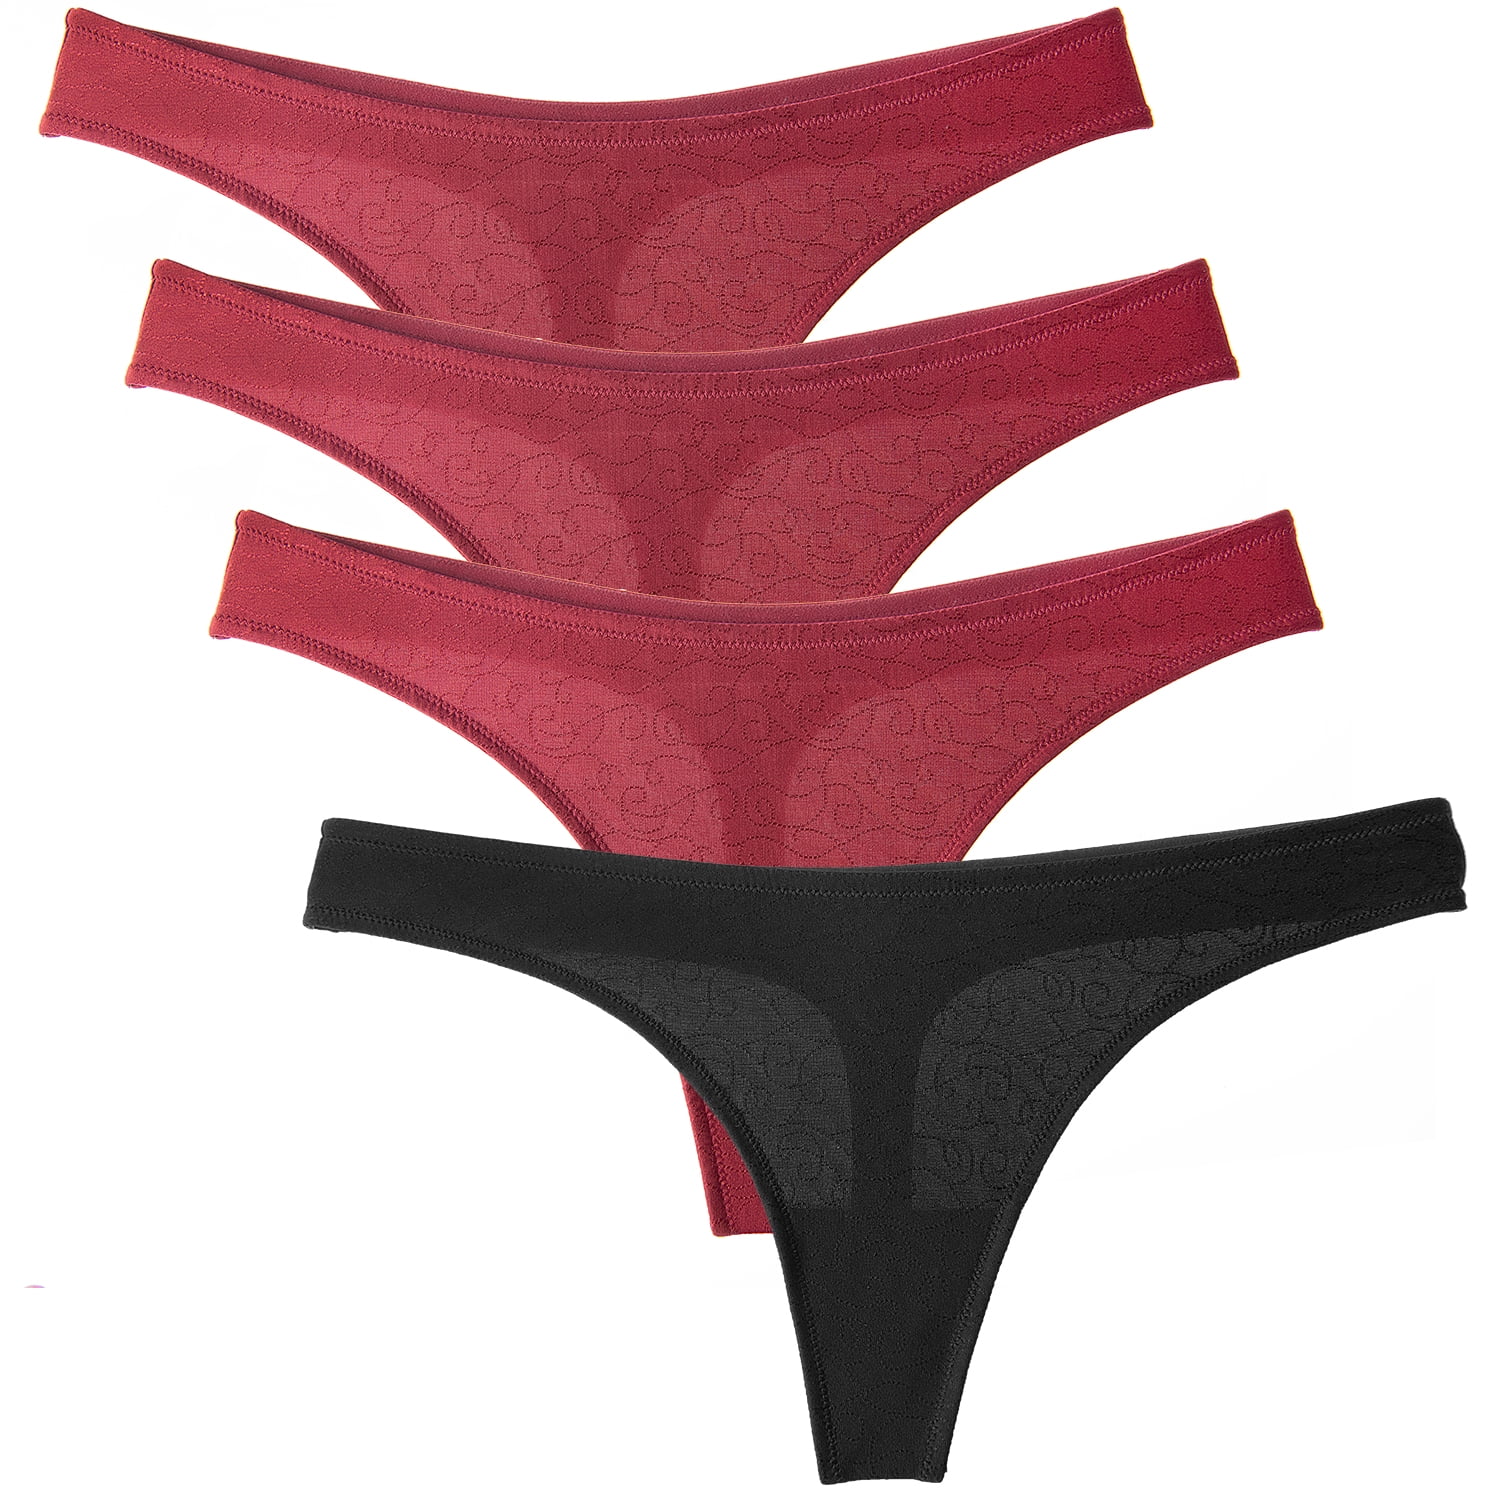 Details about   Sexy Lingerie Women Lace Panties Underwear Plain Micro Mini G-string Thong Panty 